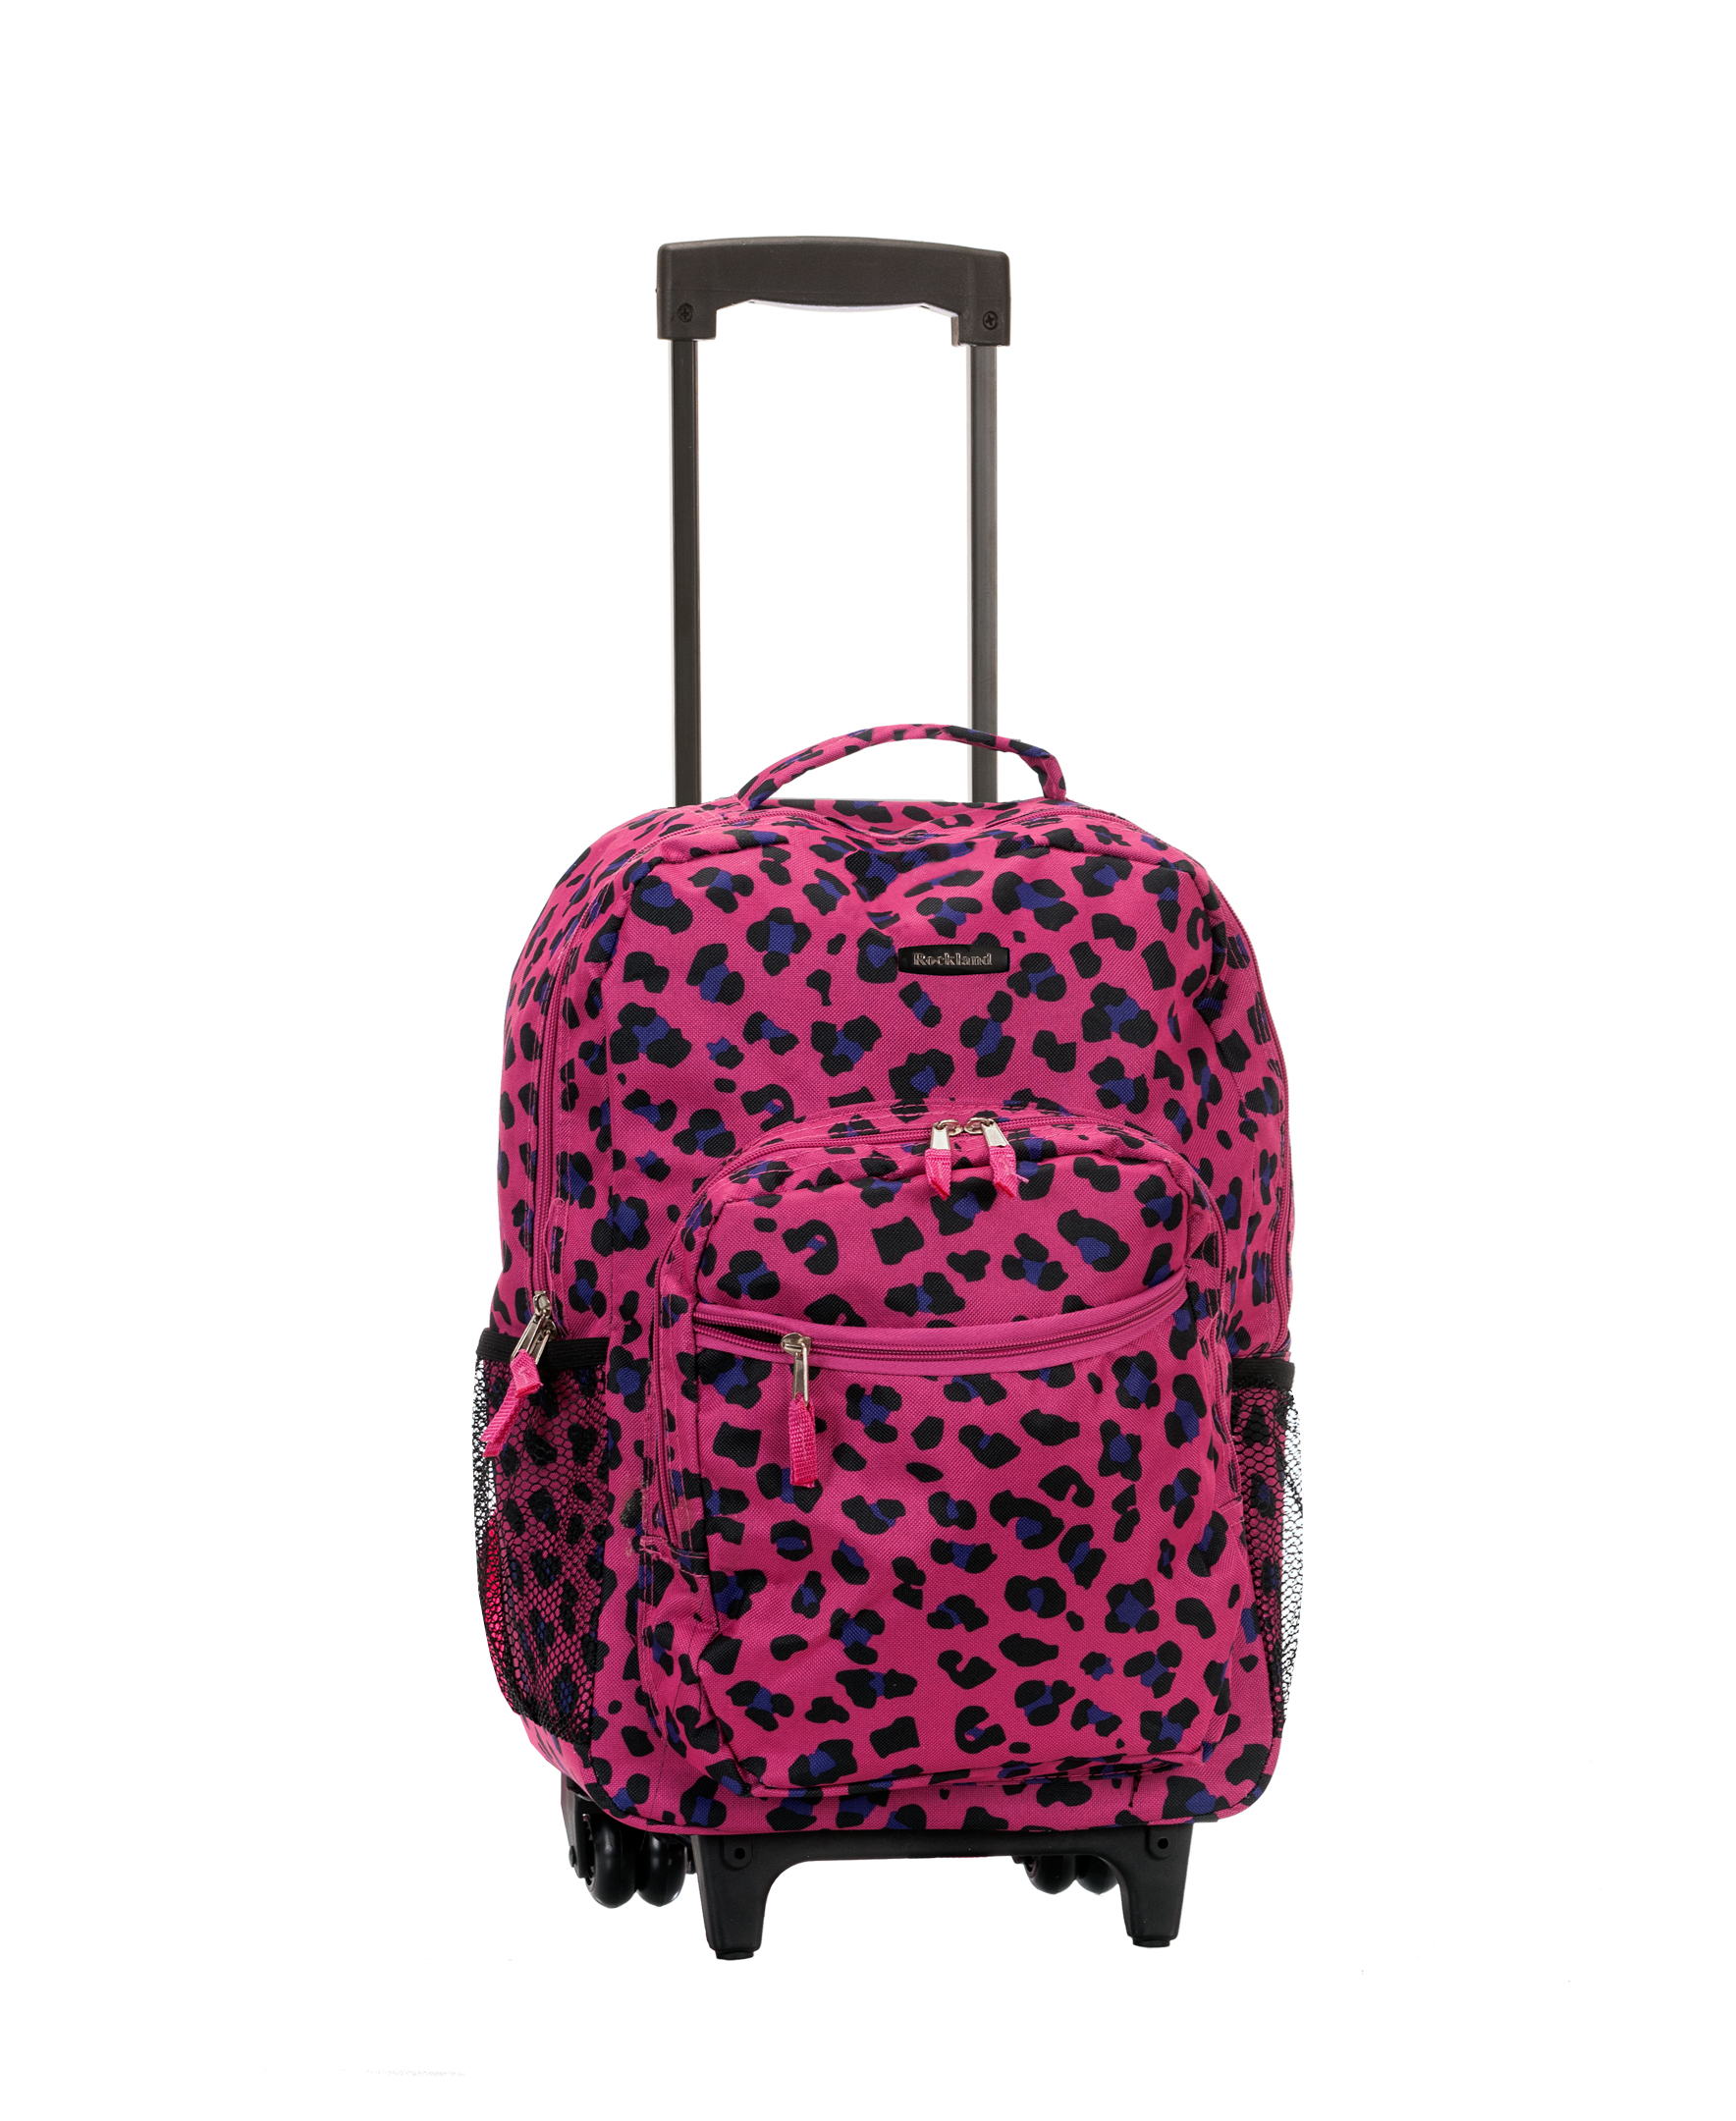 Rockland Unisex Luggage 17" Rolling Backpack R01 Magenta Leopard - image 3 of 3